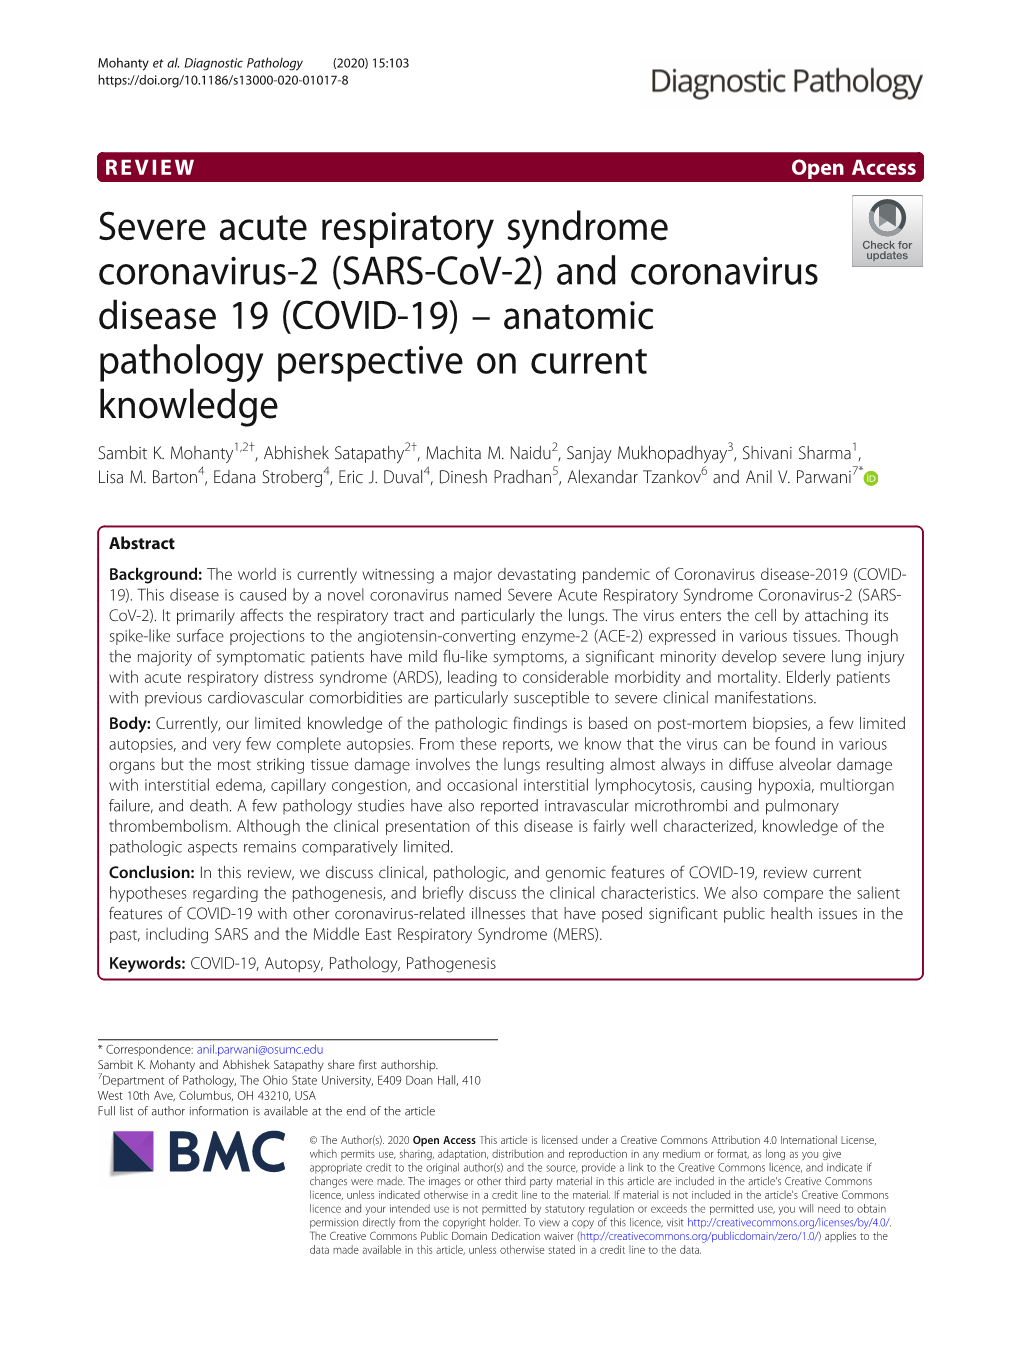 Severe Acute Respiratory Syndrome Coronavirus-2 (SARS-Cov-2) and Coronavirus Disease 19 (COVID-19) – Anatomic Pathology Perspective on Current Knowledge Sambit K